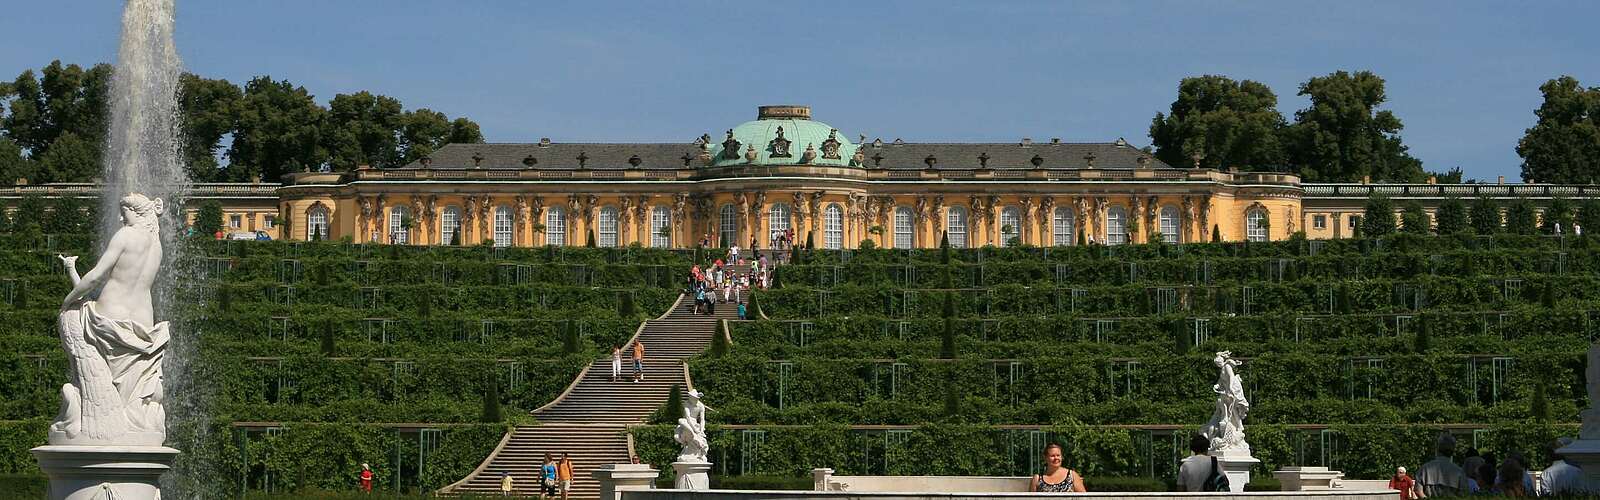 Fontäne vor Schloss Sanssouci in Potsdam,
        
    

        Foto: TMB-Fotoarchiv/SPSG/Leo Seidel